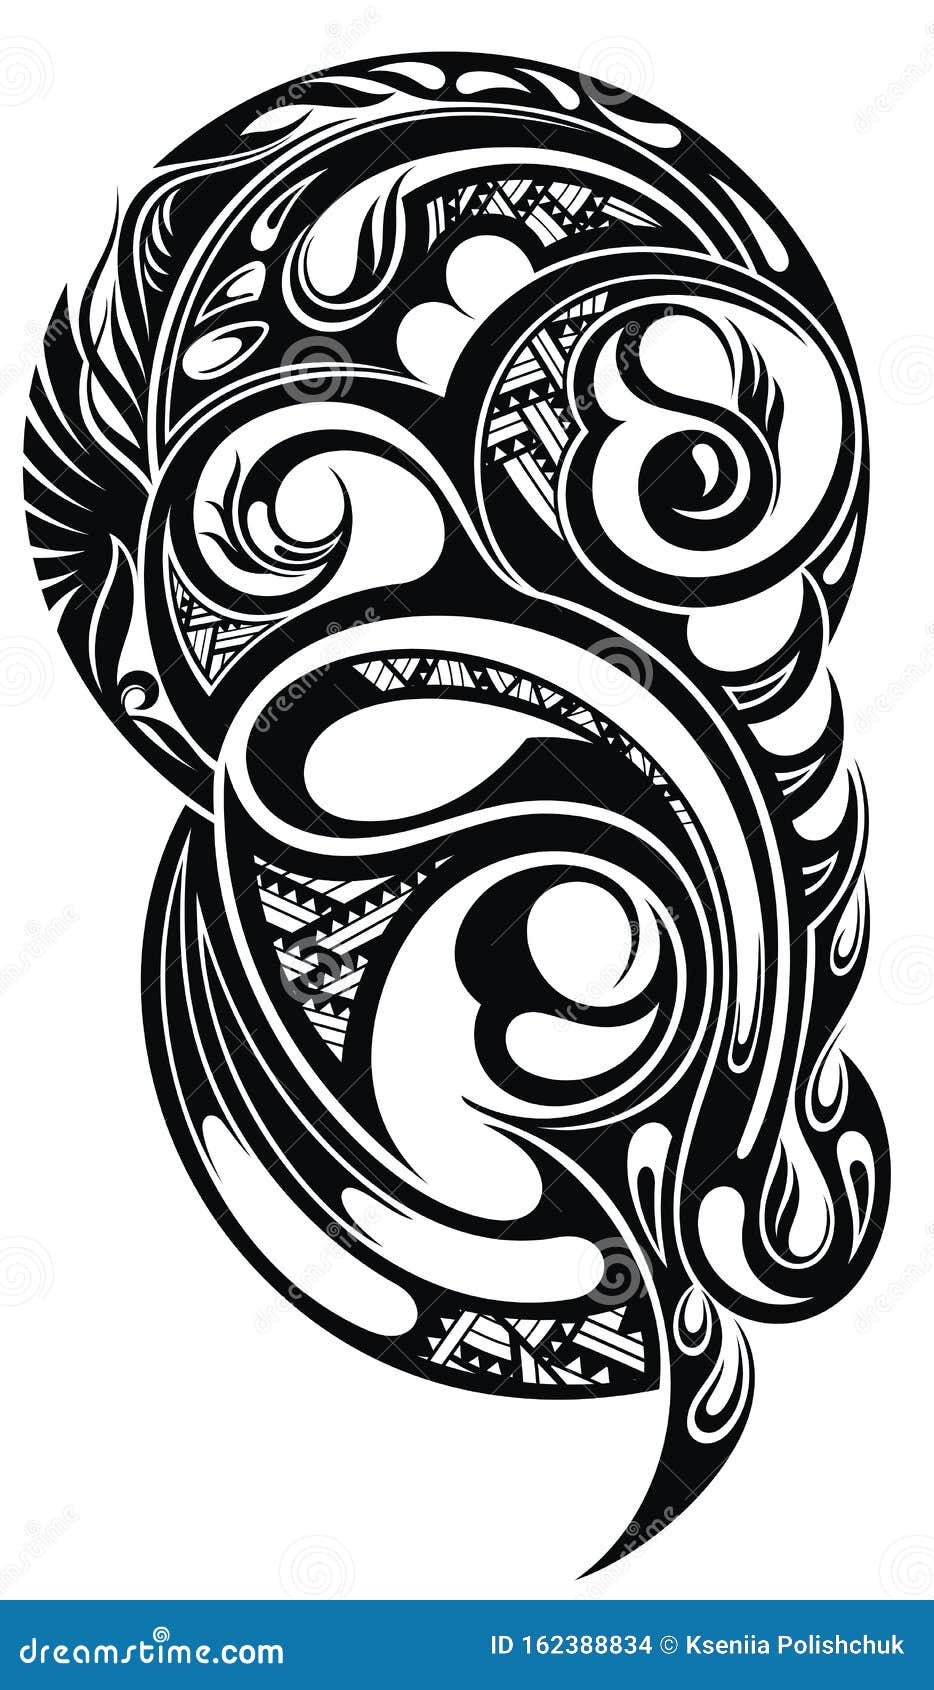 cool tribal tattoo designs to draw